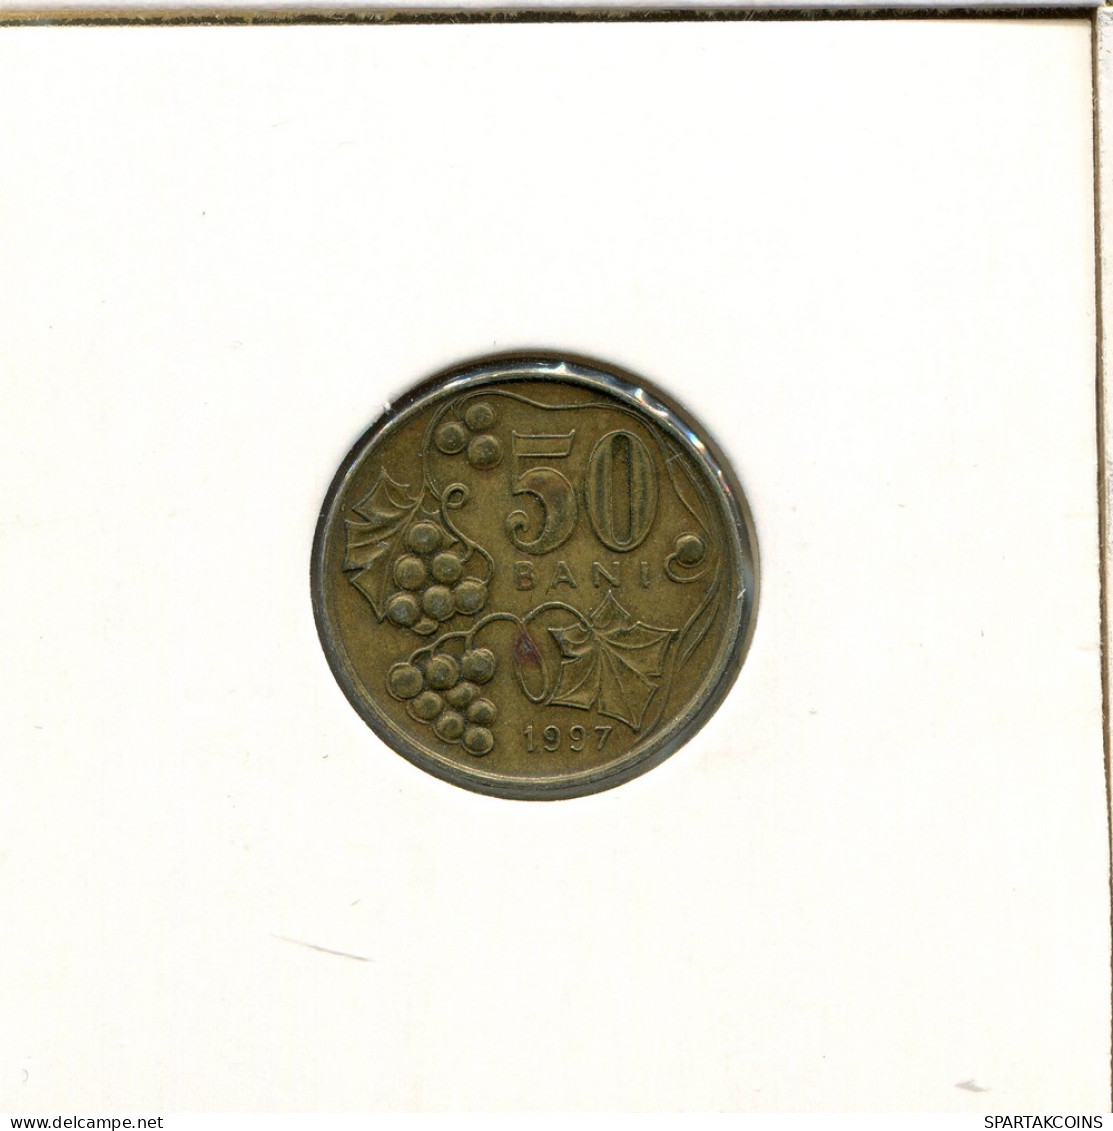 5 BANI 1997 MOLDOVA Coin #AR707.U - Moldavië